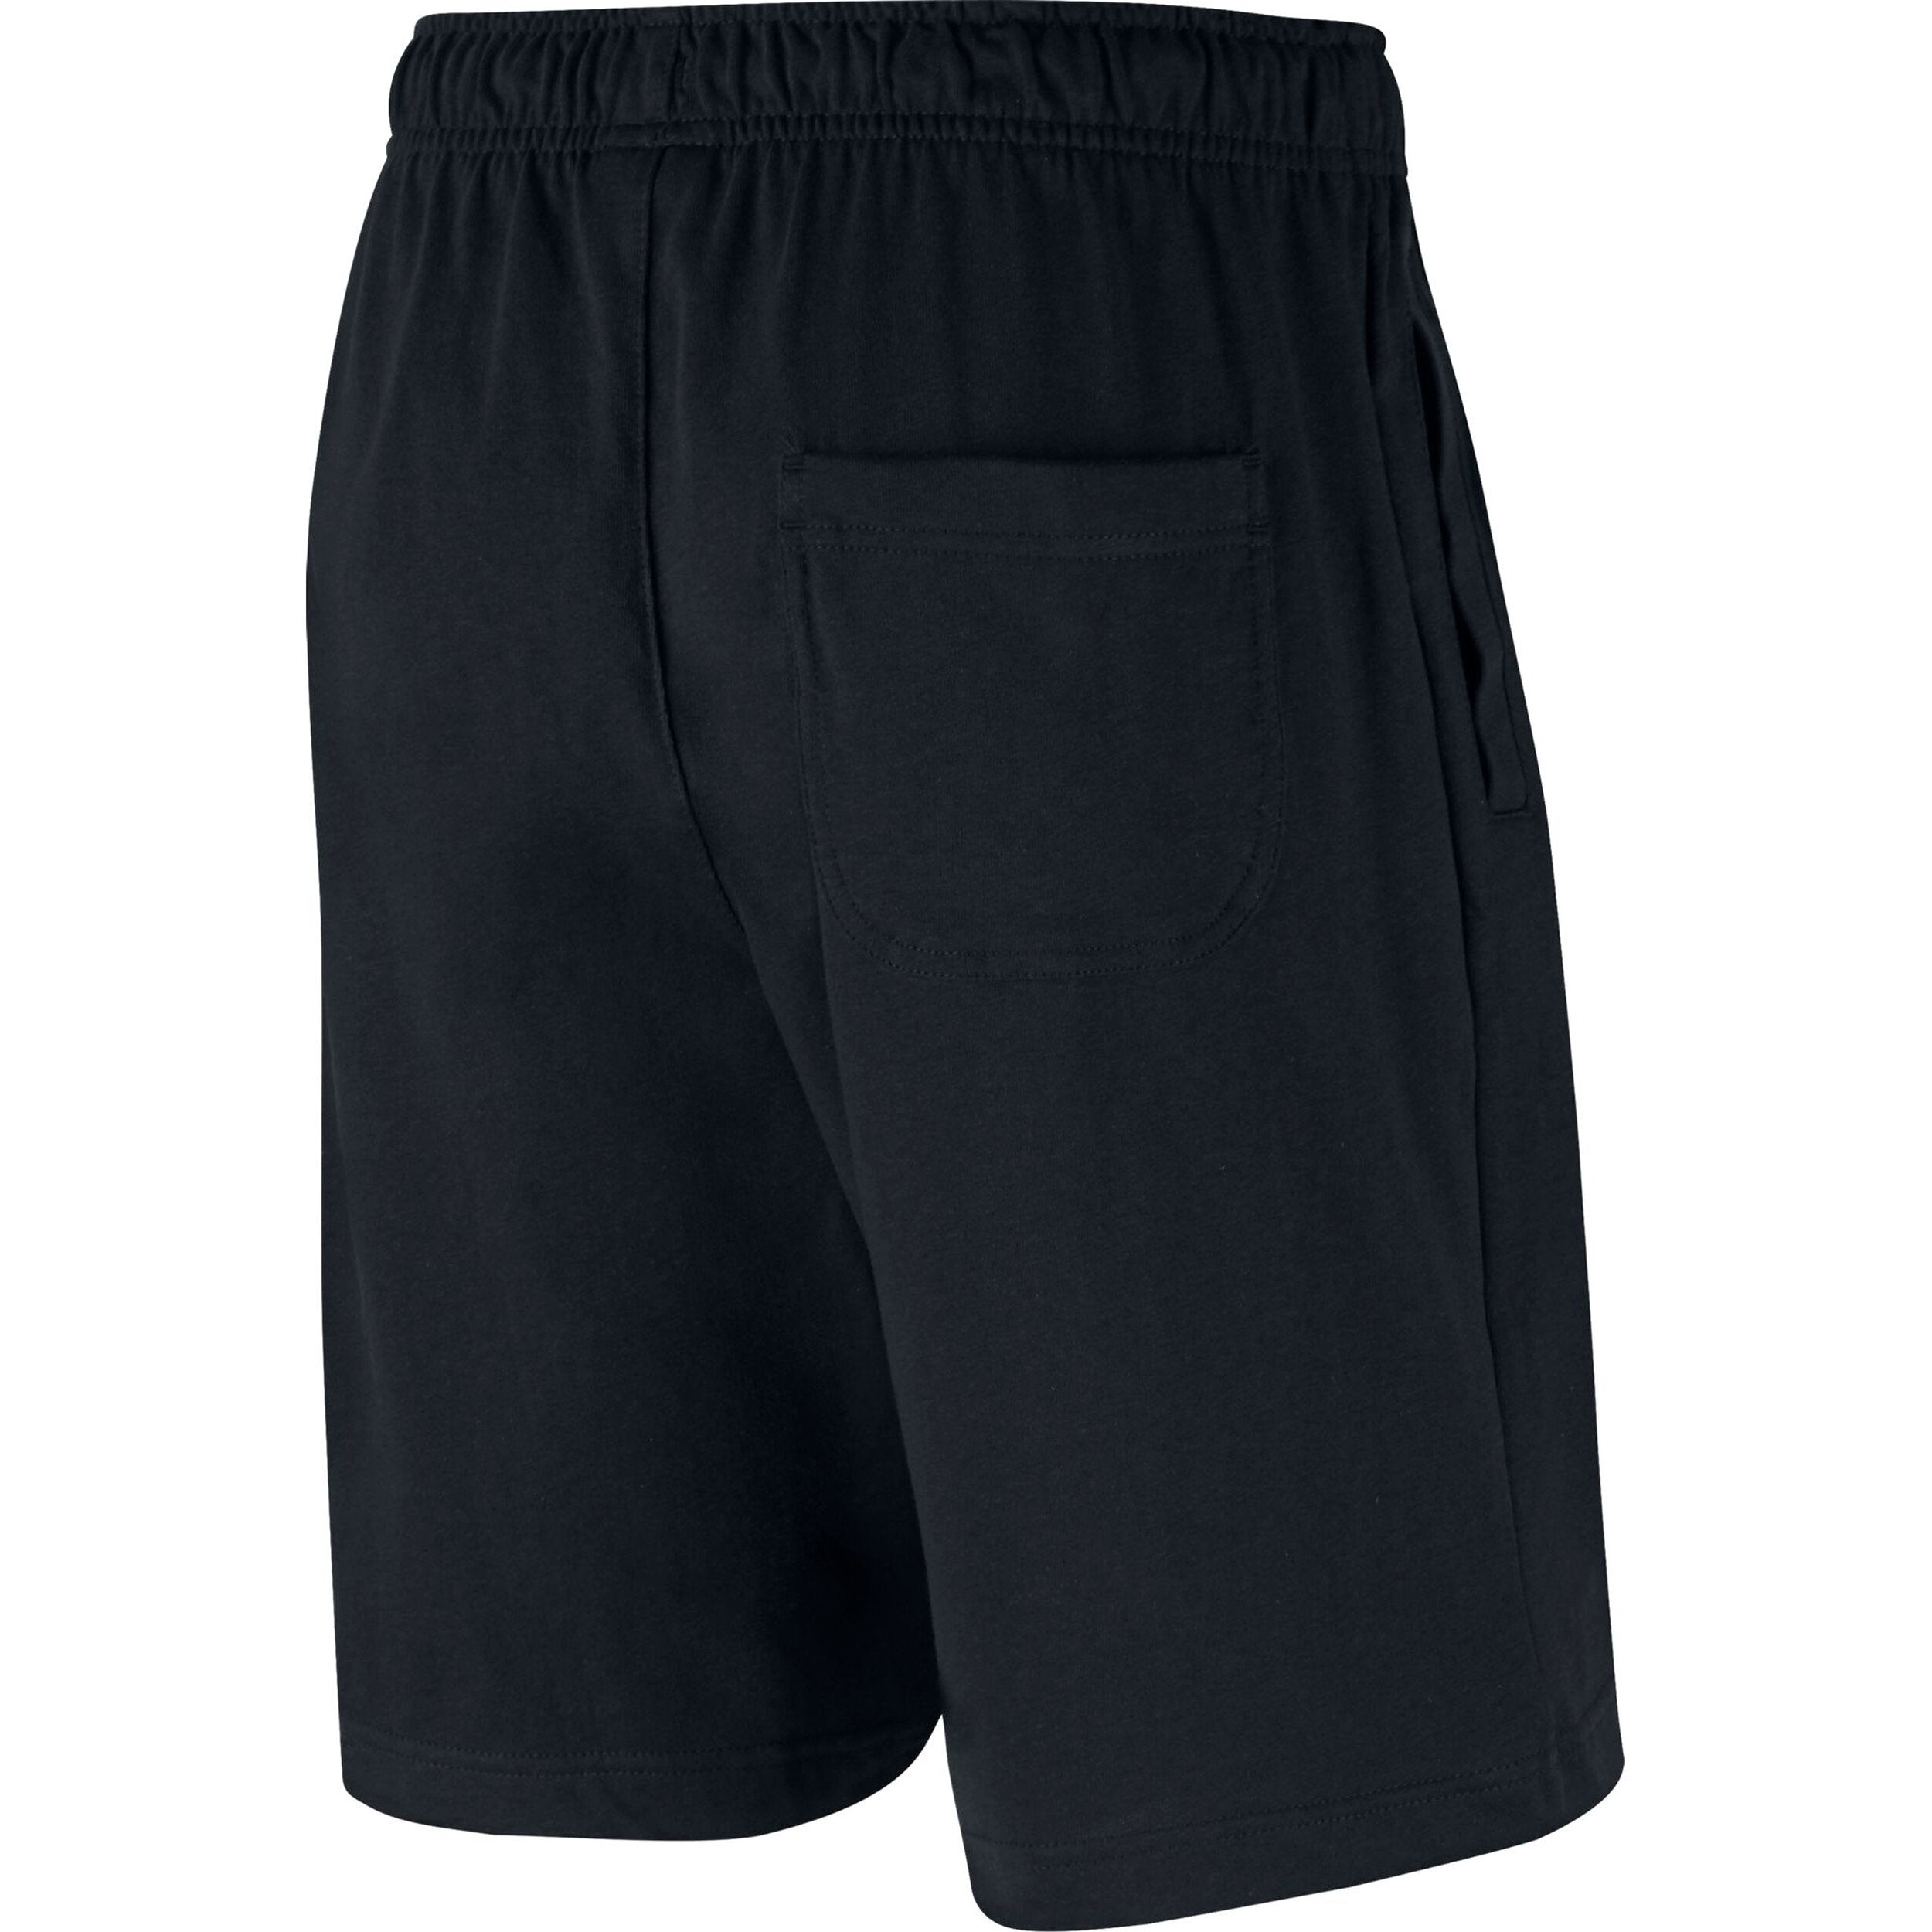 Fußball - Textilien - Shorts Club Jersey Short